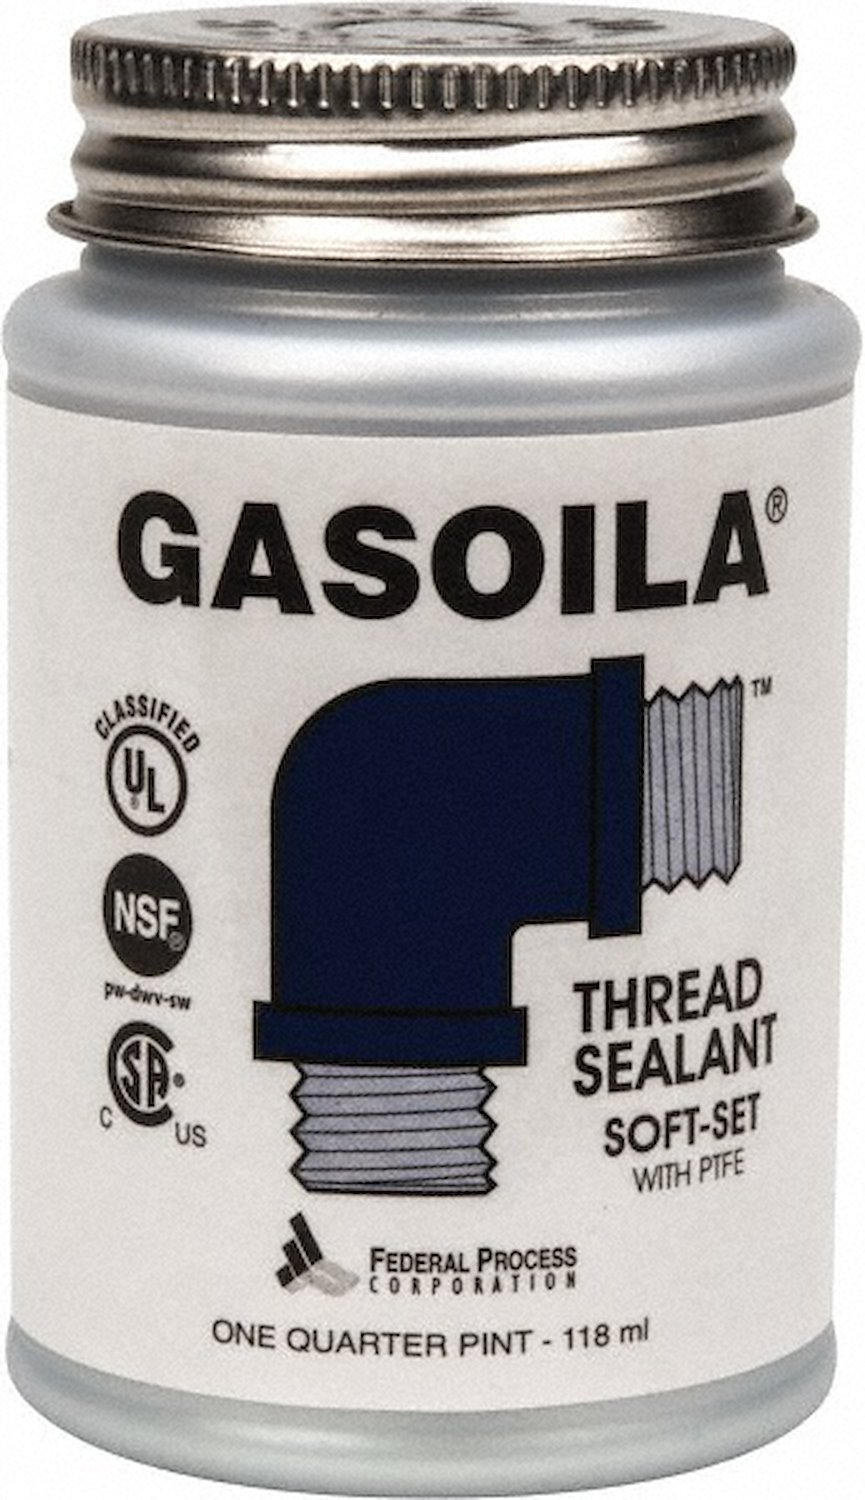 Gasoila Soft-Set Thread Sealant with PTFE 1/4 Pint